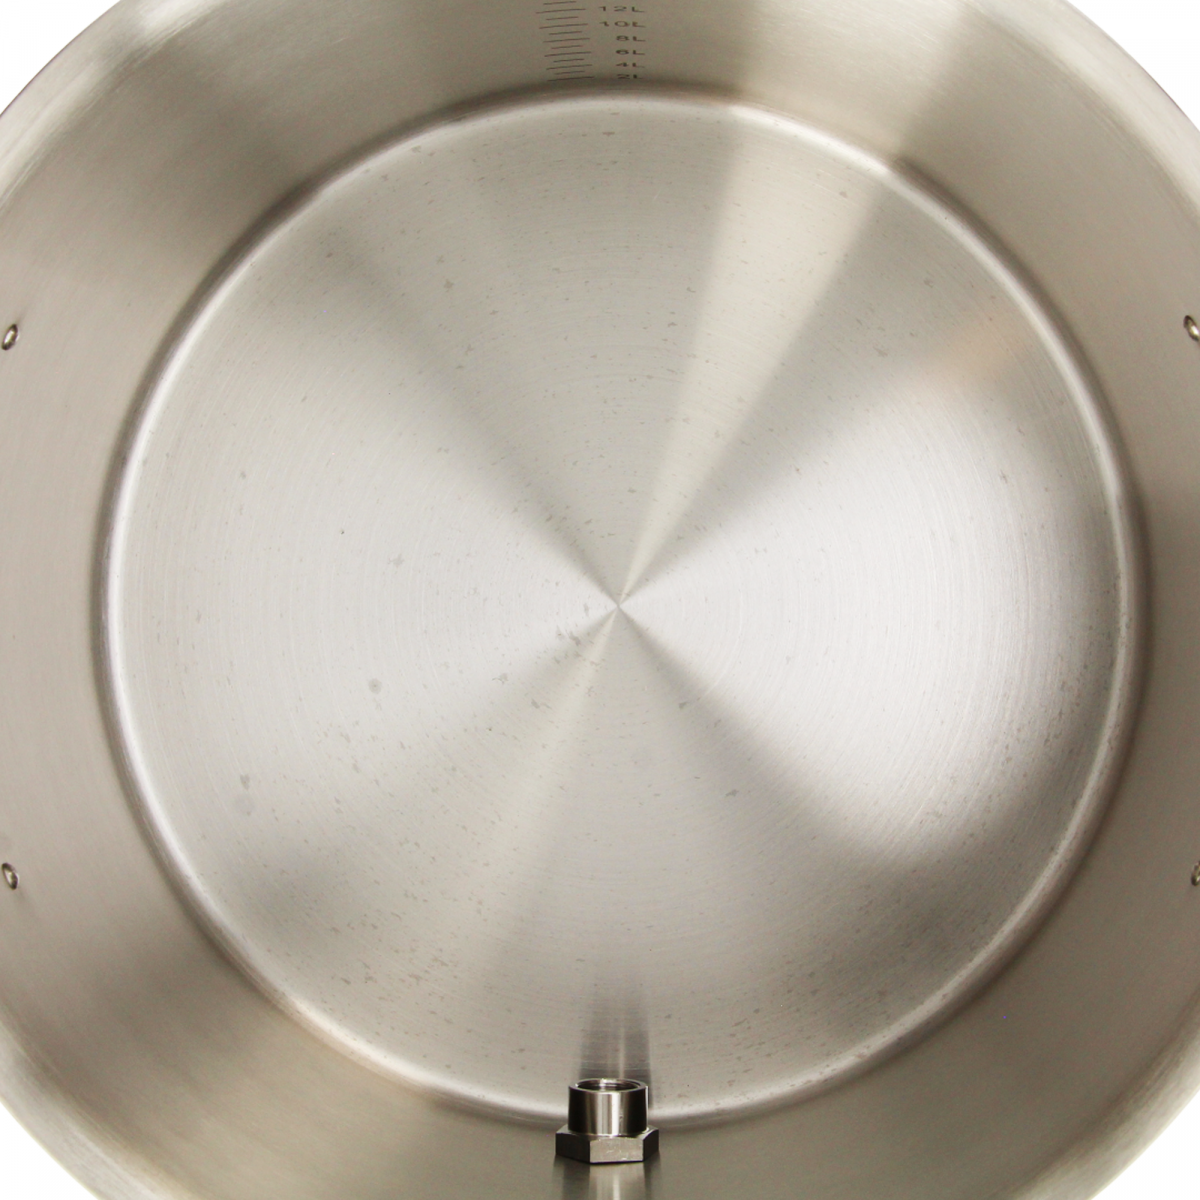 Brewferm homebrew kettle SST 20 l with ball valve (36 x 24 cm)